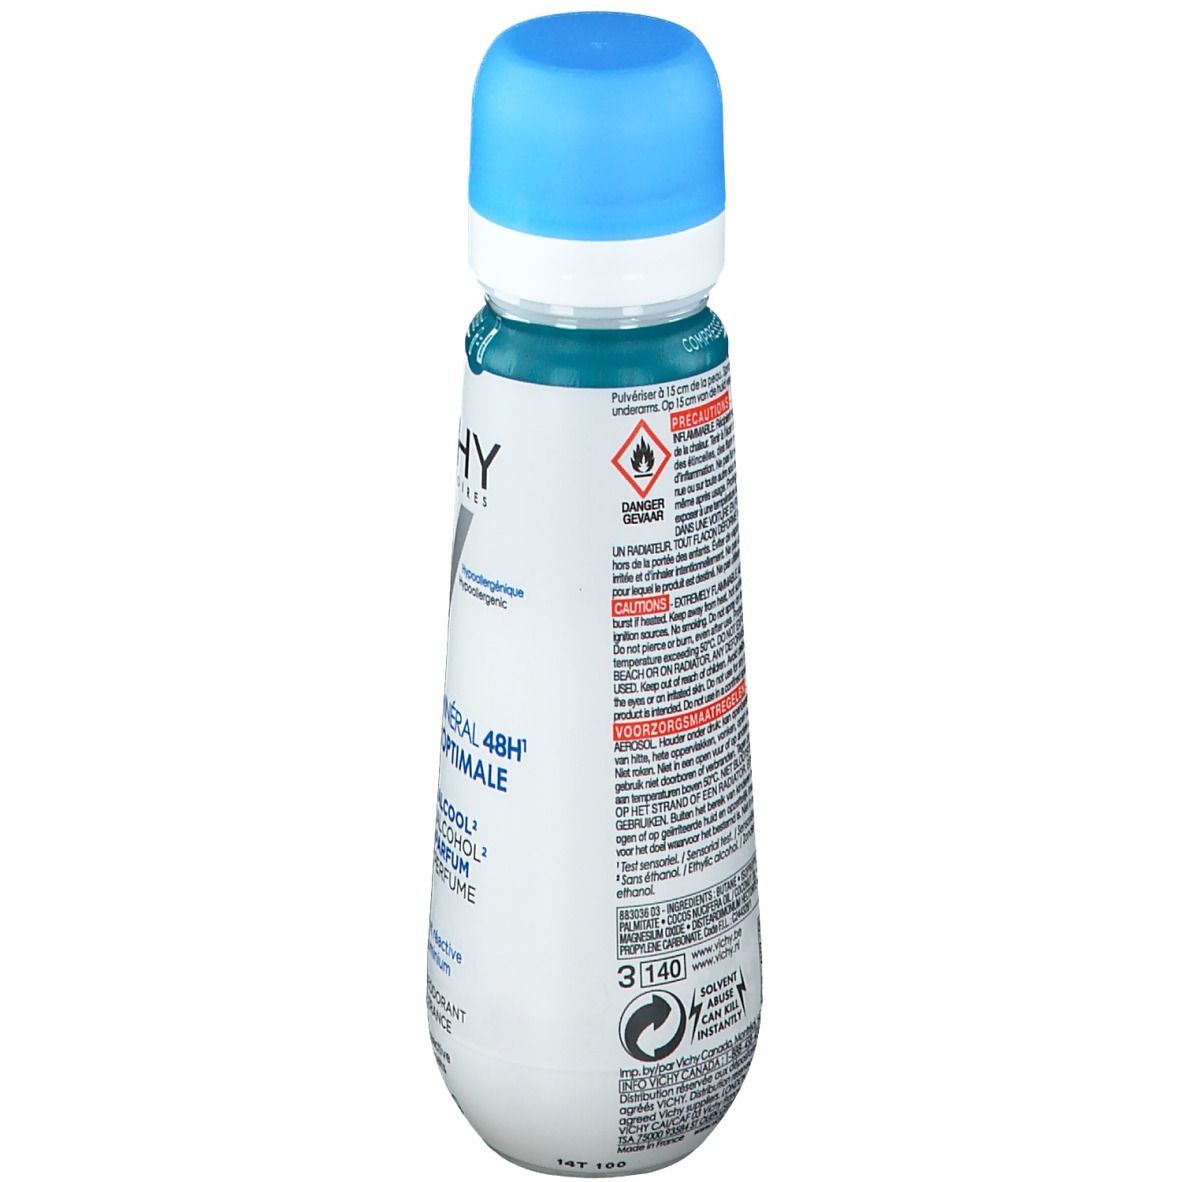 VICHY Déodorant minéral 48h Tolérance Optimale Spray